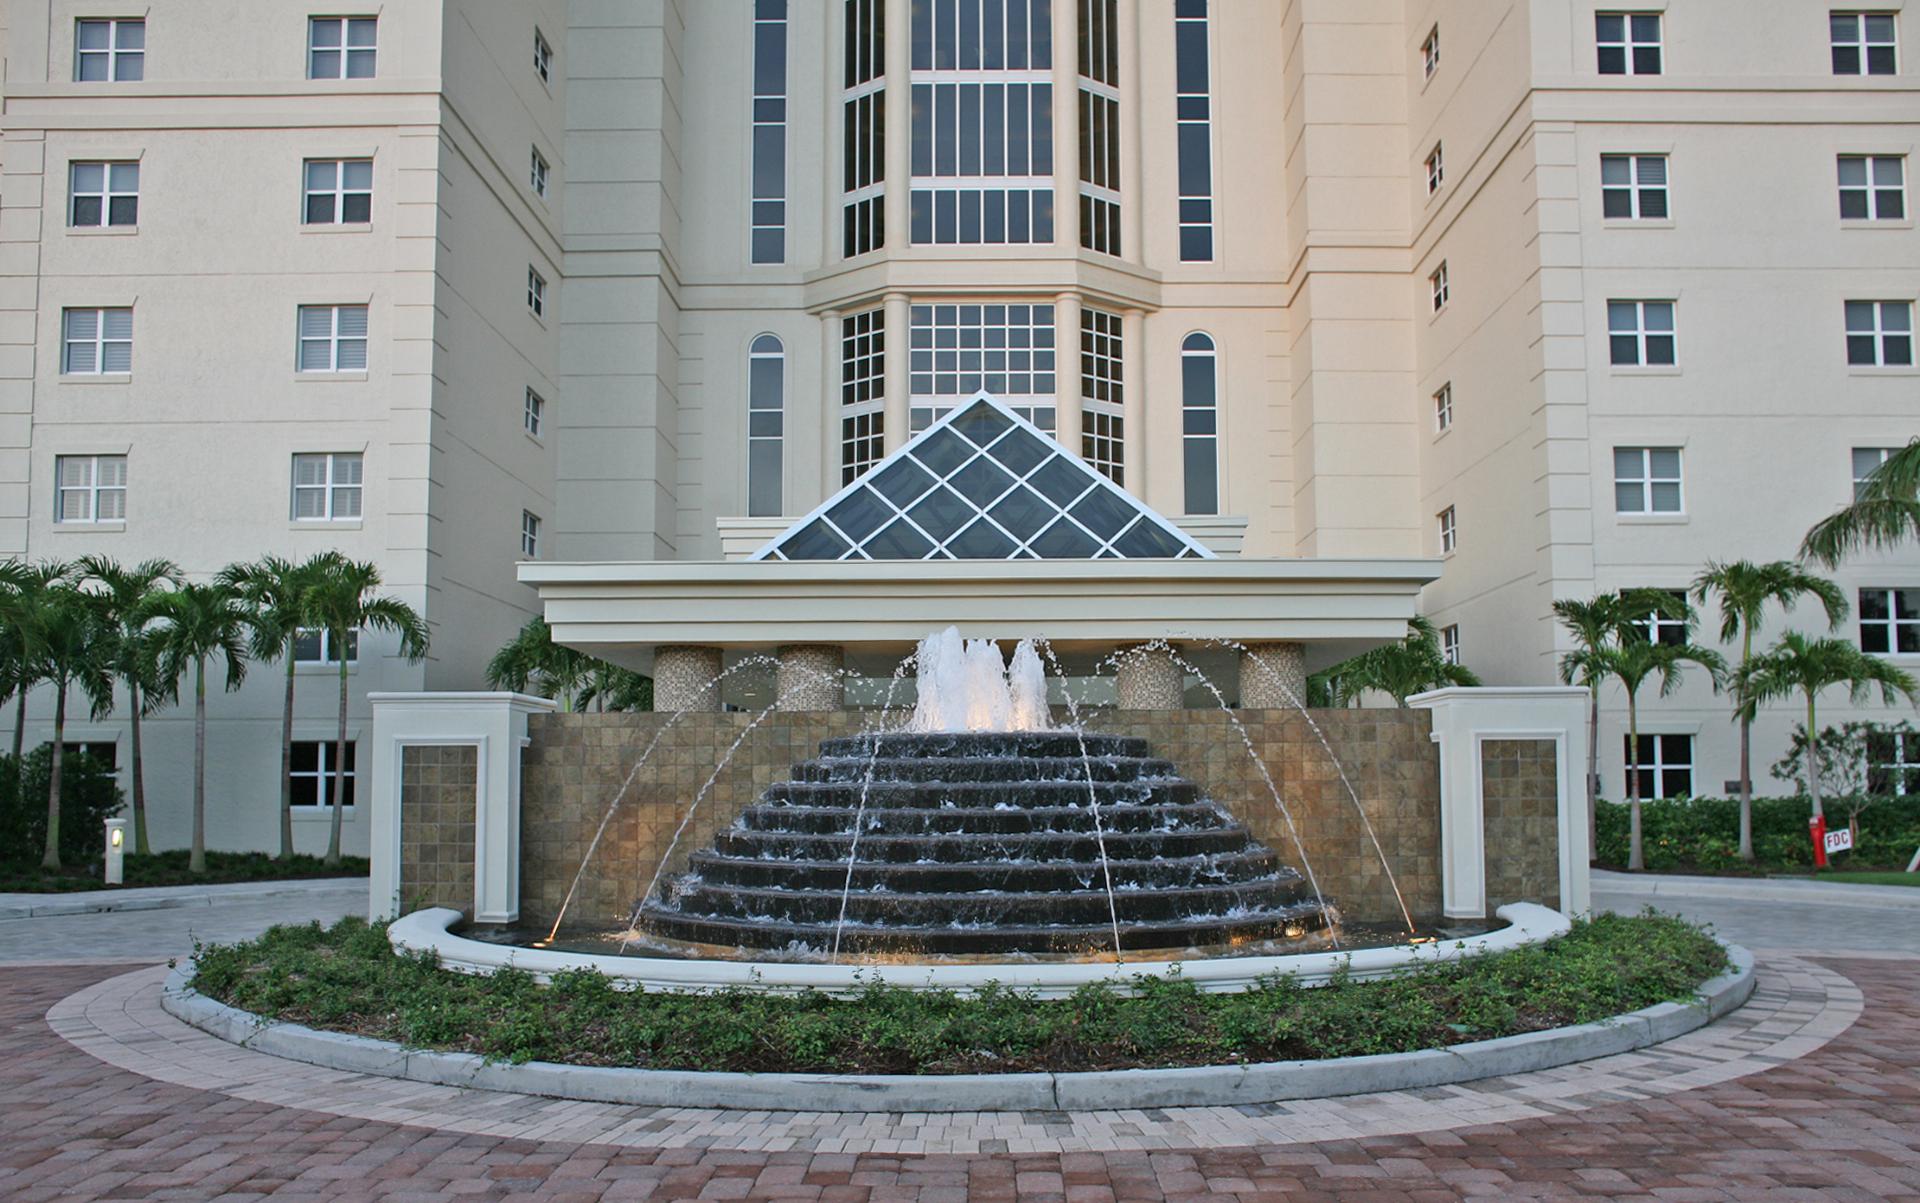 Contessa Fountain